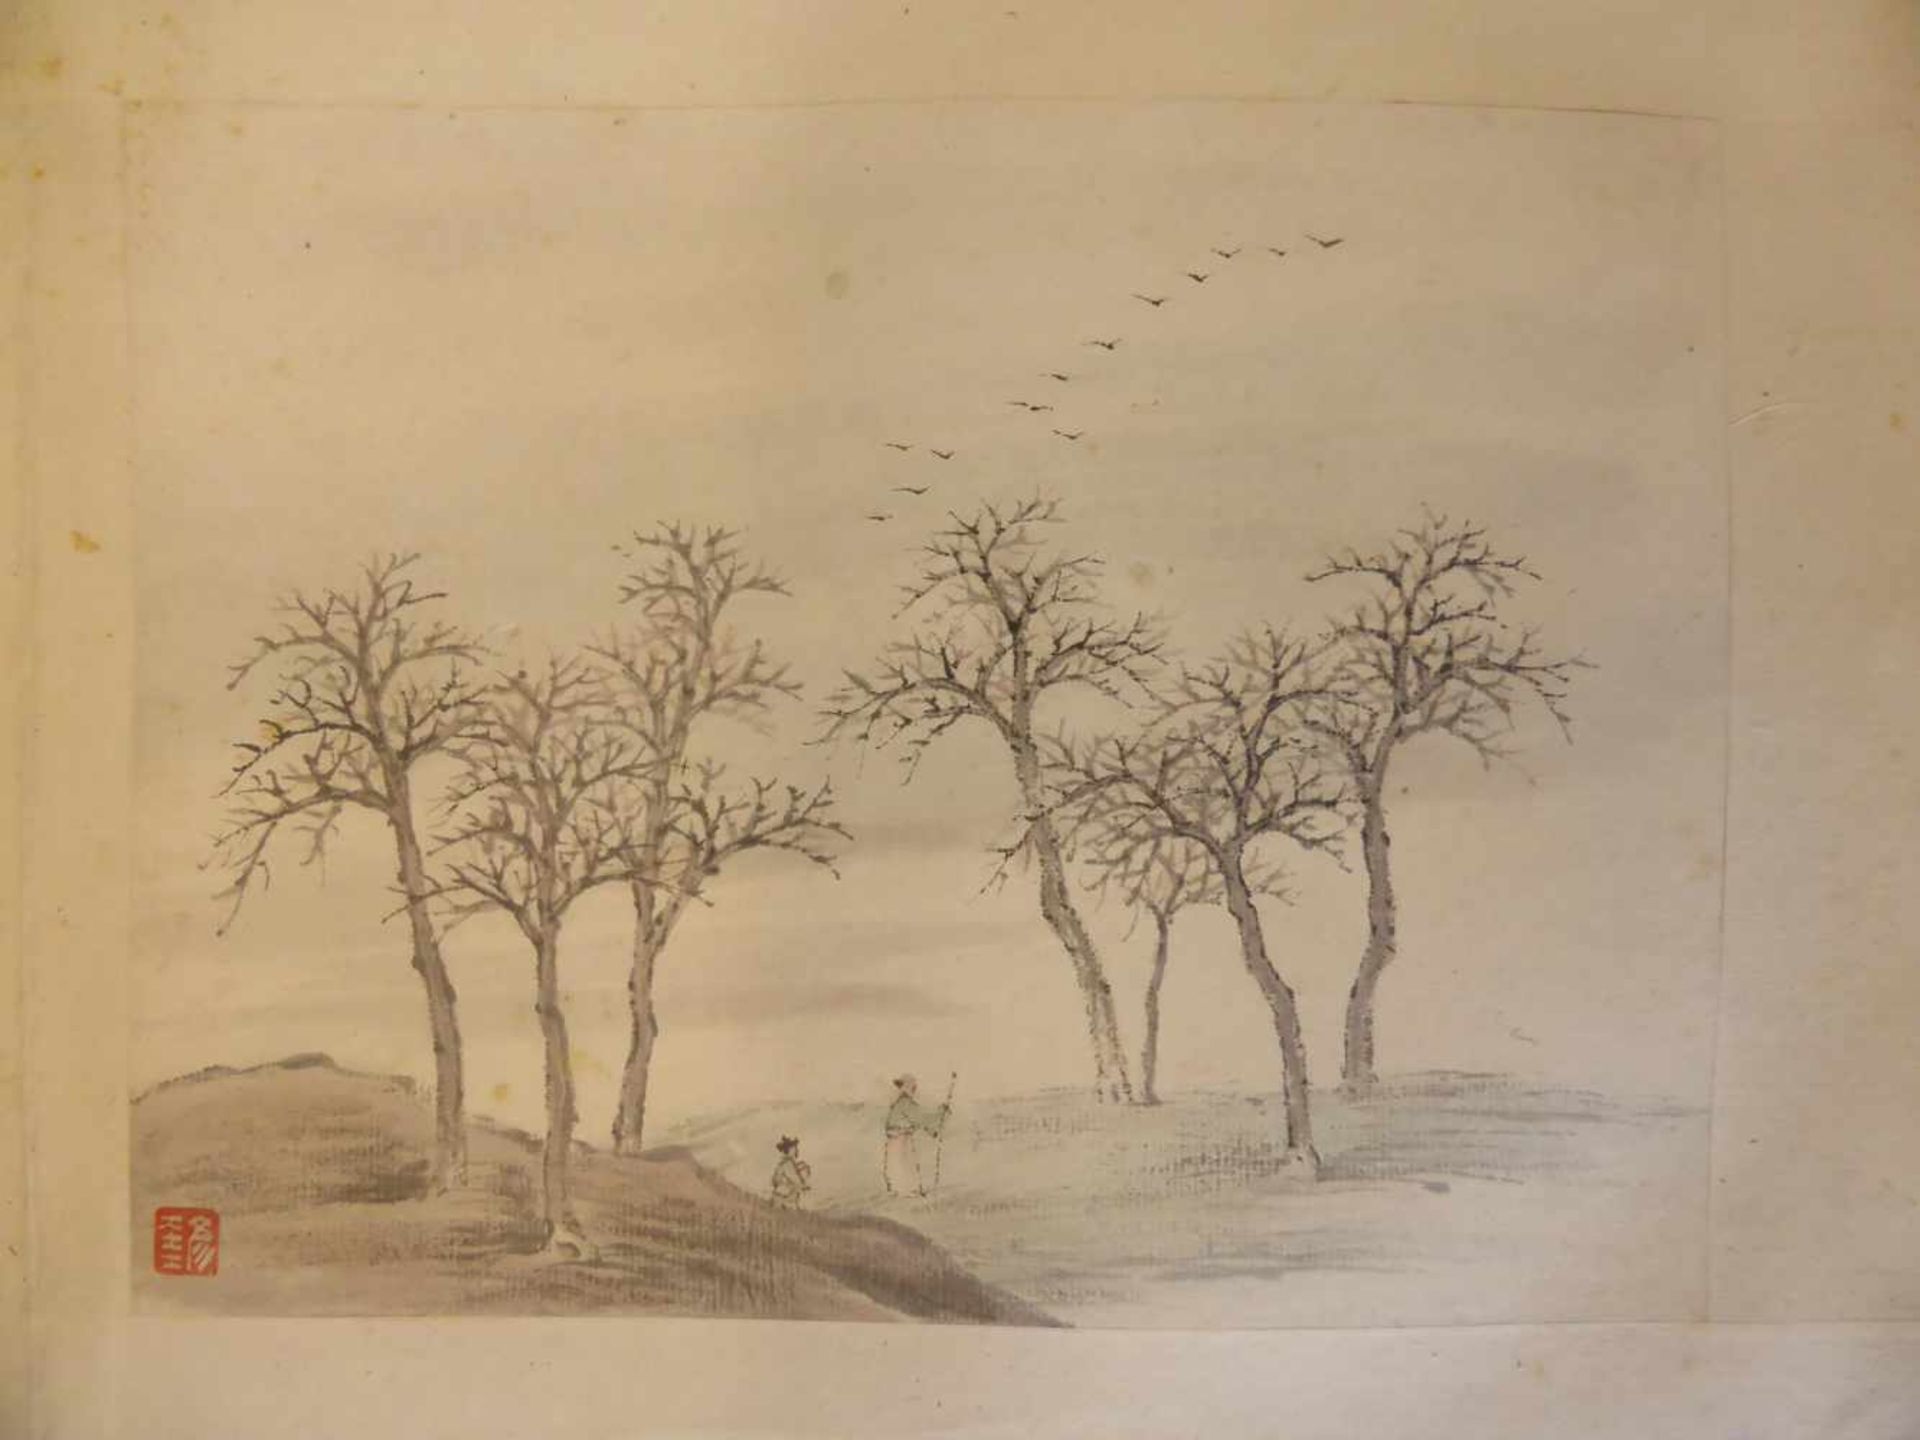 LI, YANKUI1840 - 1913. Water and mountain landscapes. China. Qing dynasty. 19th c. Leporello - Bild 12 aus 13